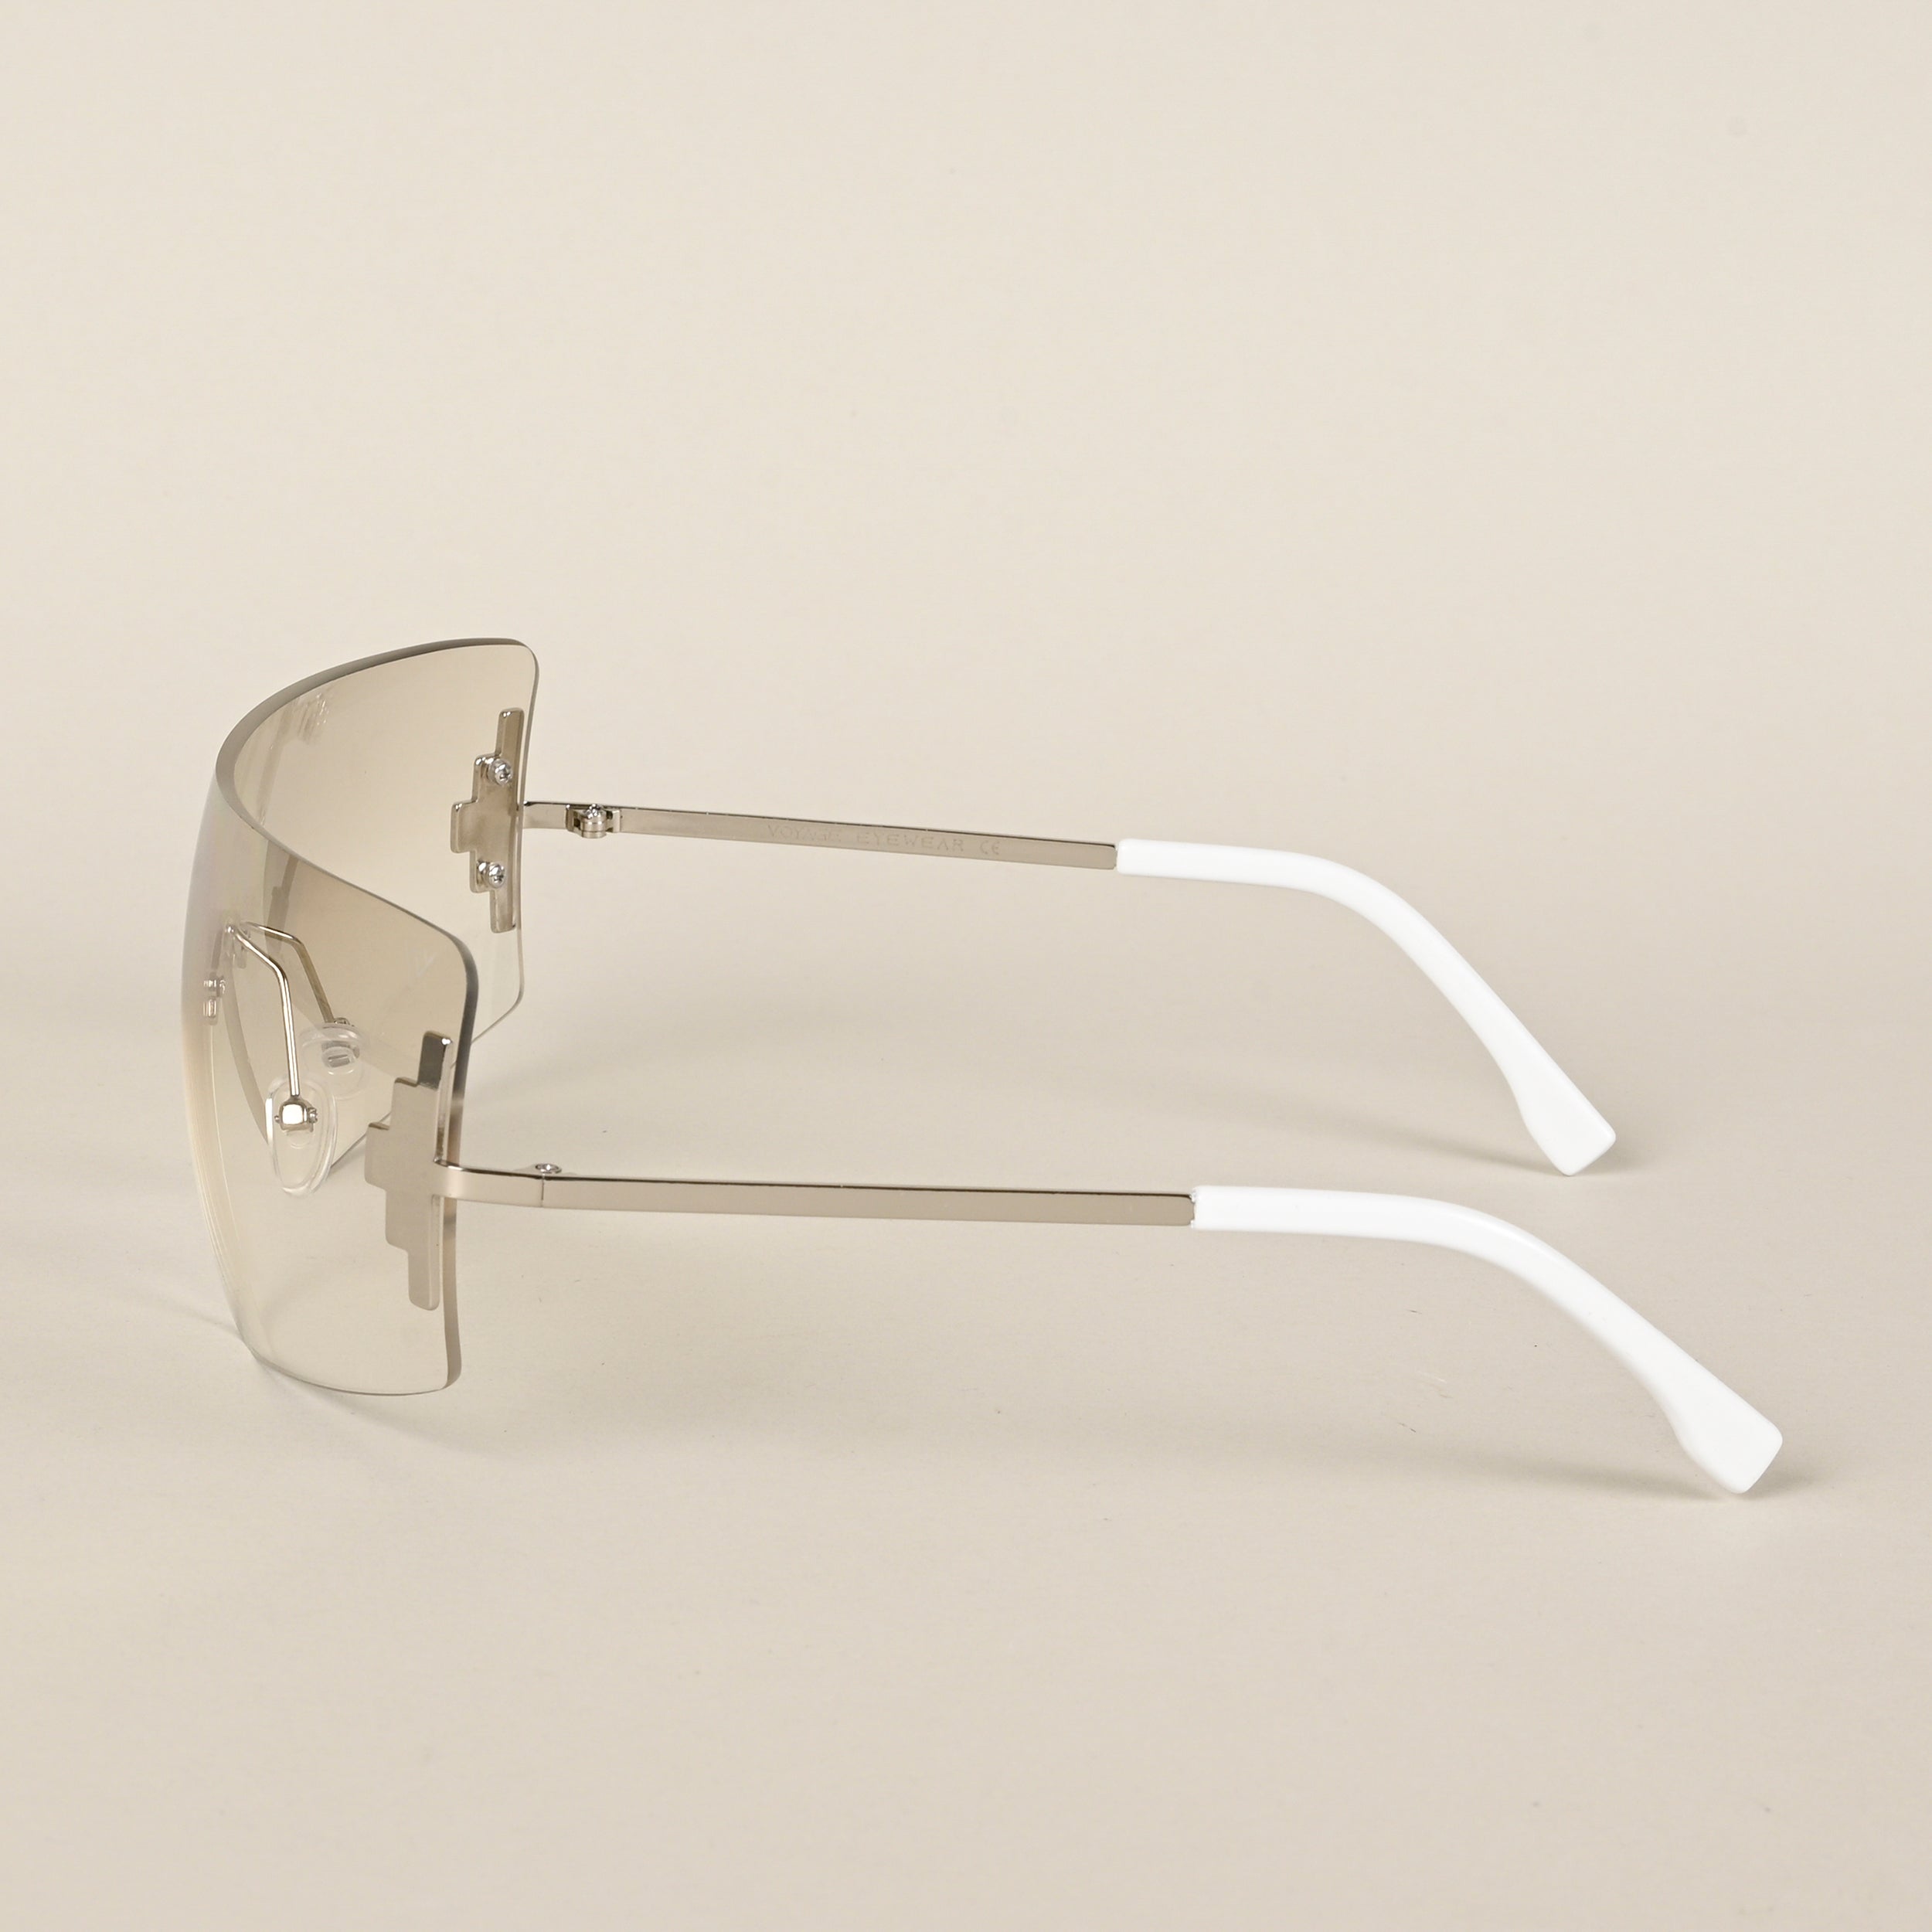 Voyage Transparent Wrap Round Sunglasses for Men & Women - MG4117